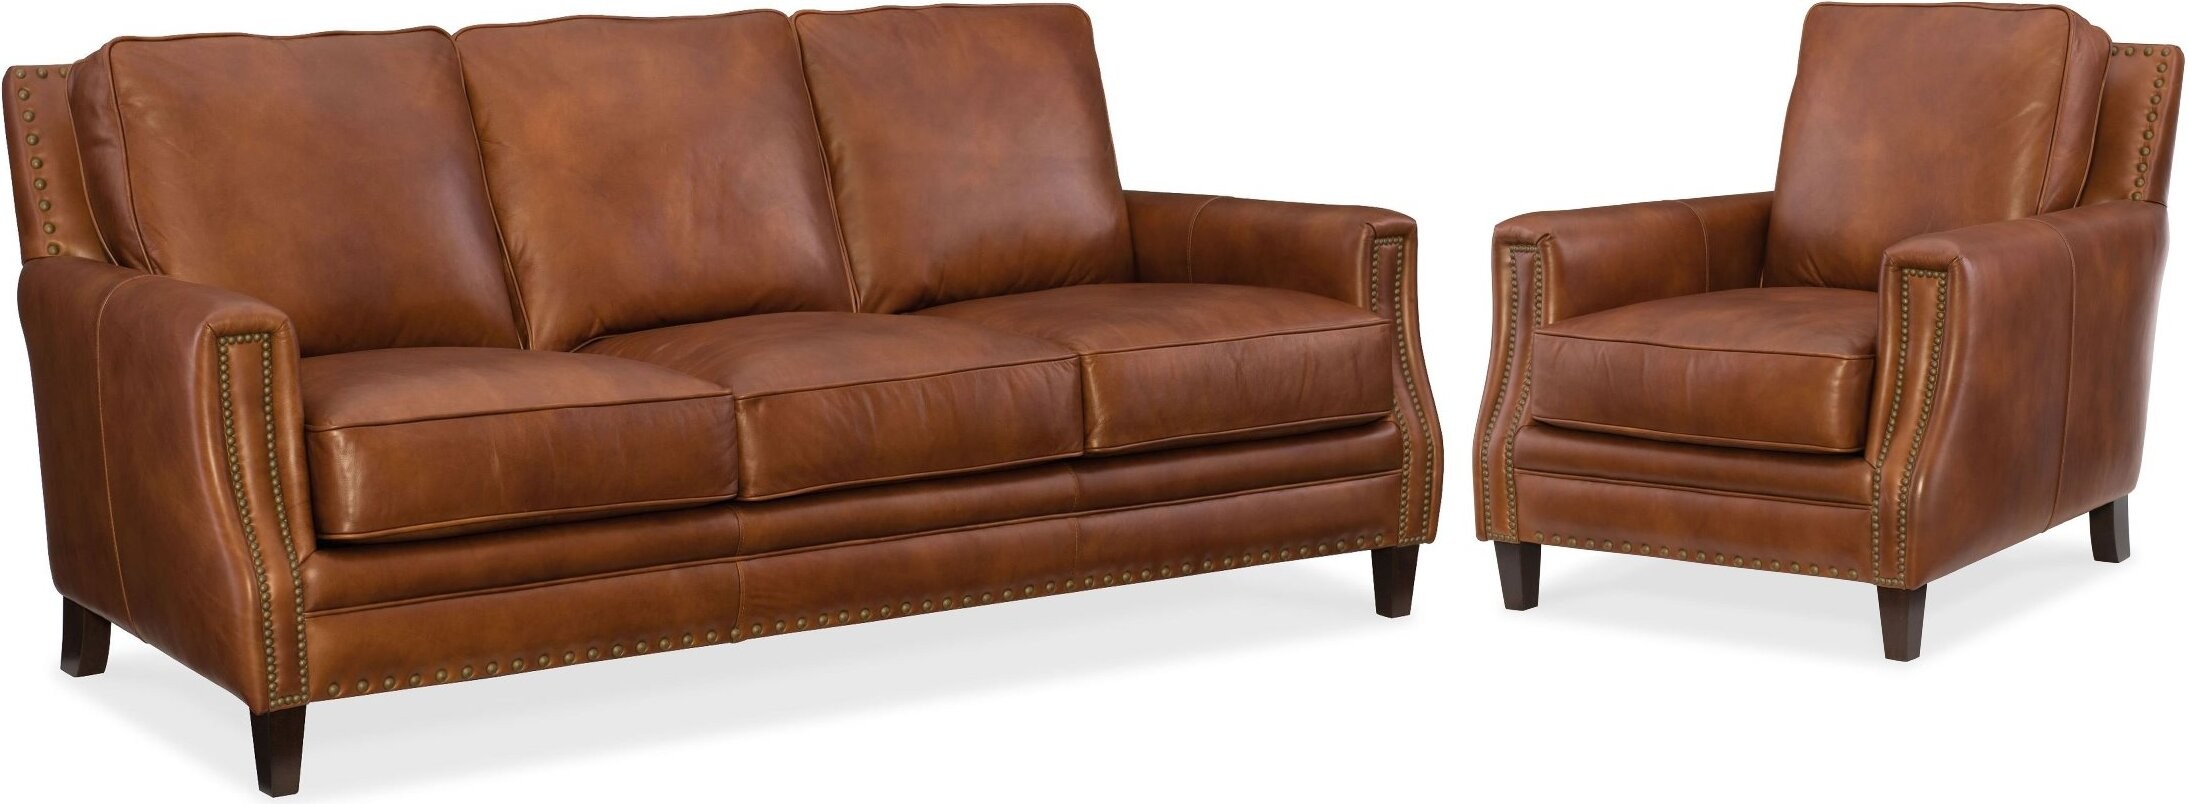 Exton Old English Saddle Leather Sofa, Seven Seas Furniture Leather